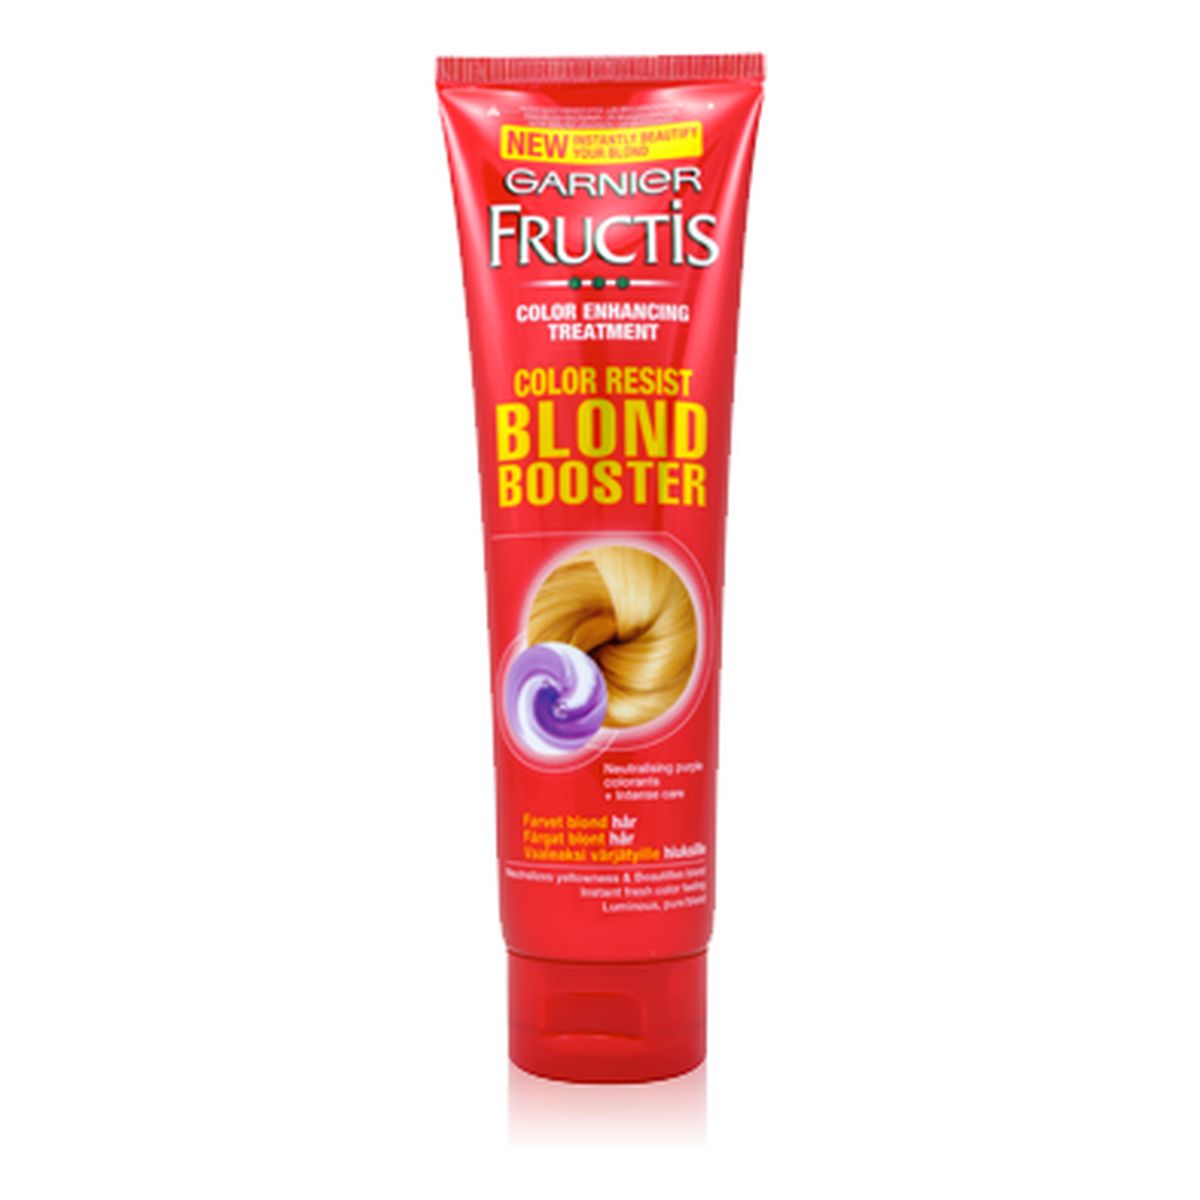 Garnier Fructis Color Resist Blond Booster Kuracja Do Włosów 150ml